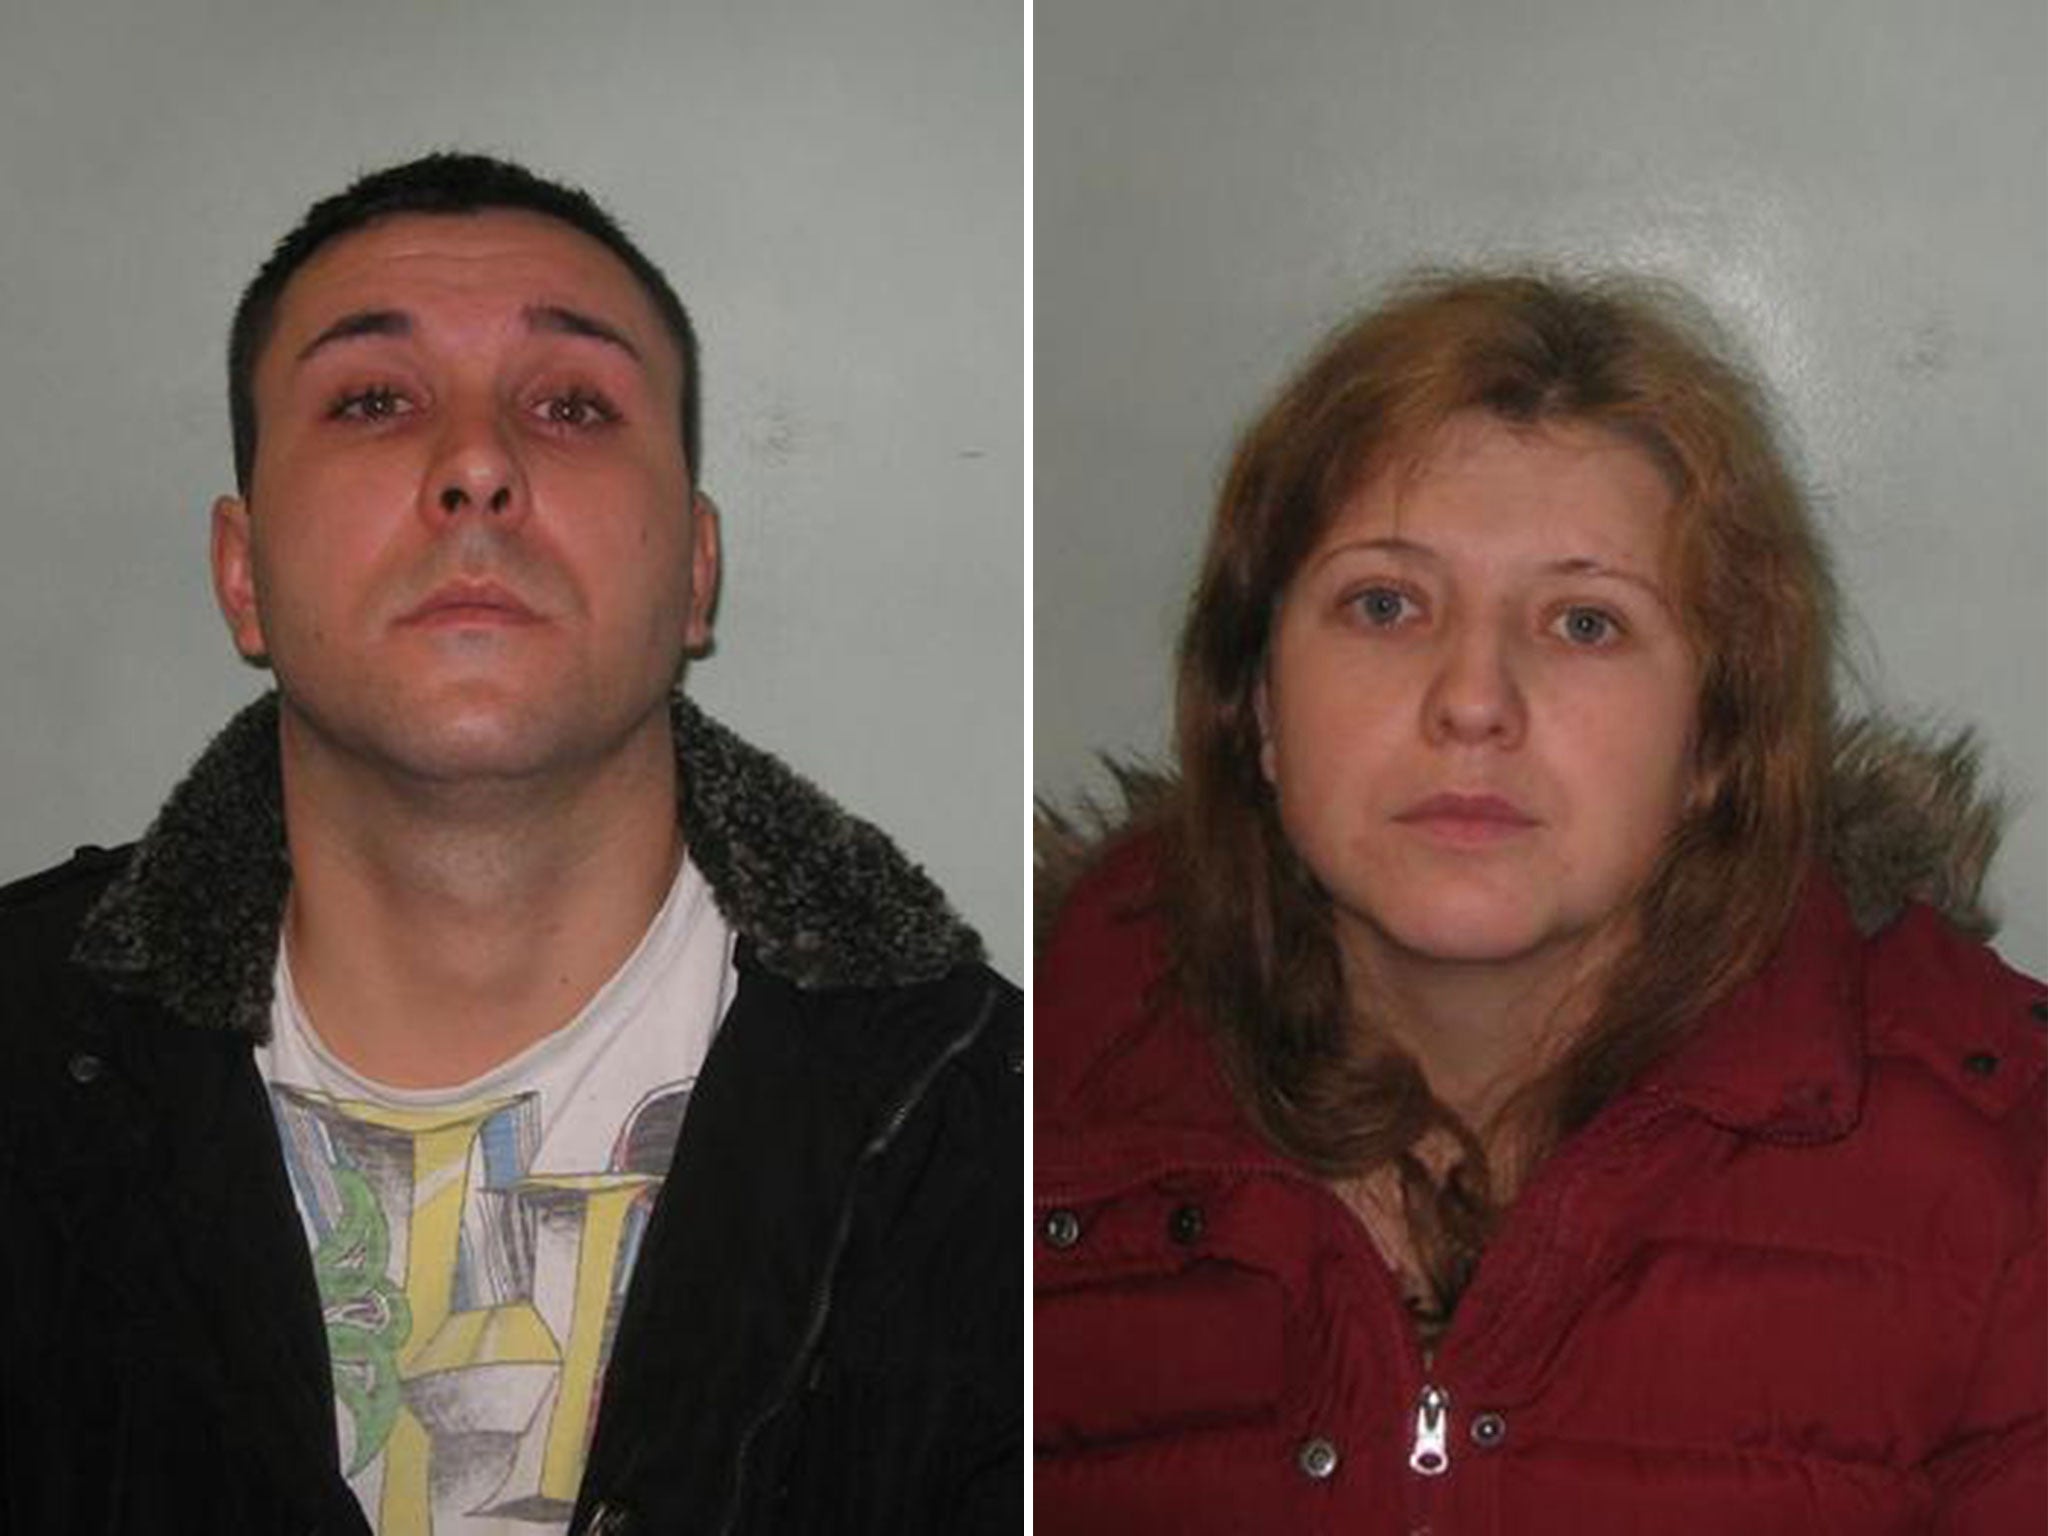 Marius Ciubotariu and Andreea Ciubotariu have been jailed